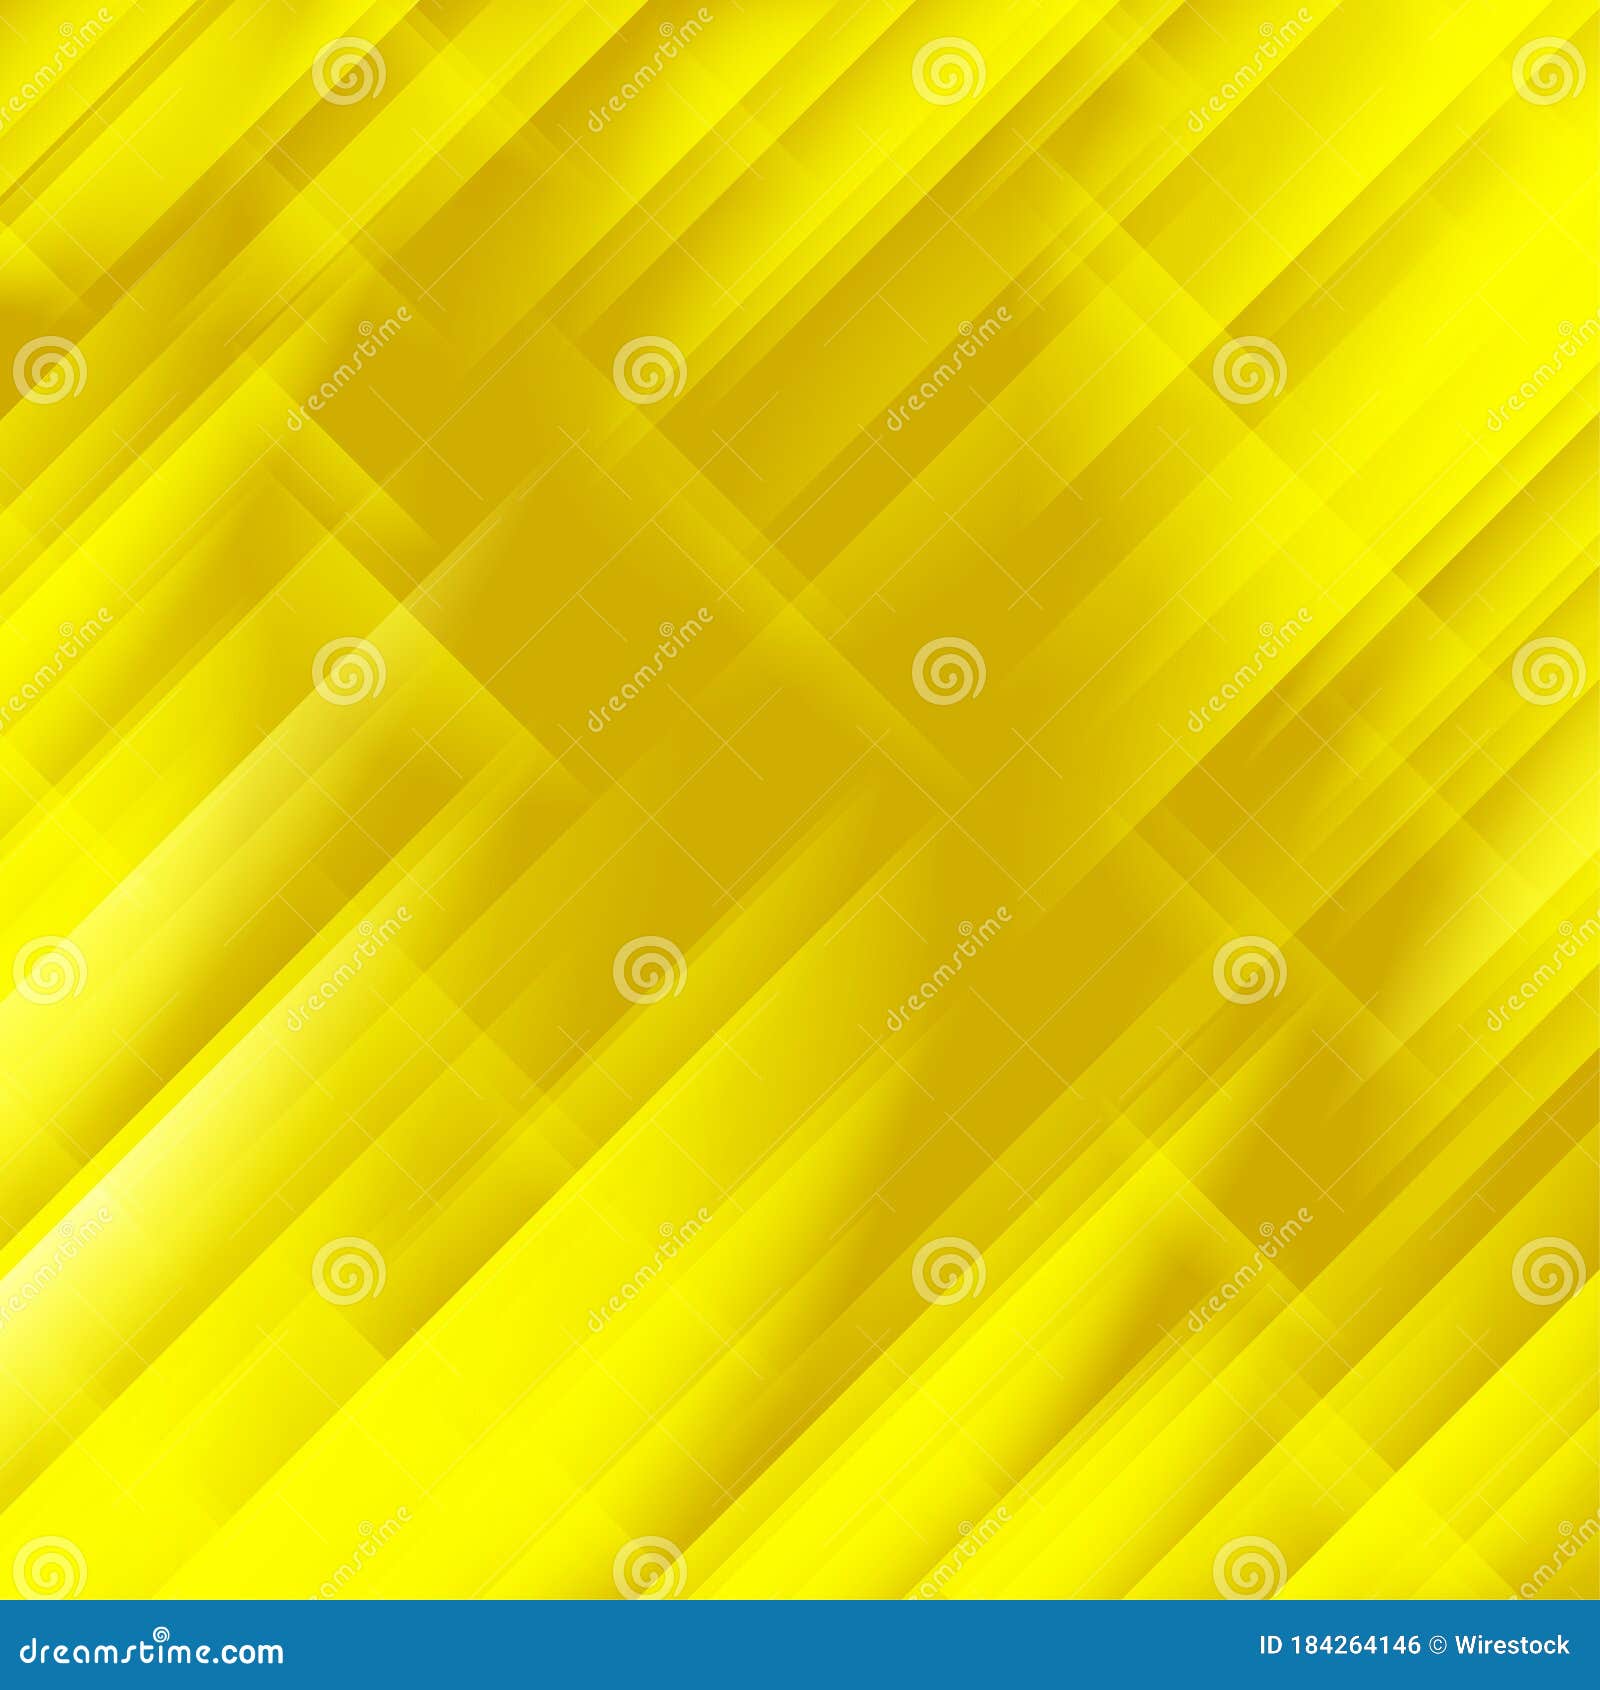 Ilustración De Un Fresco De Fondo Amarillo Brillante Para Fondos De Pantalla  Stock de ilustración - Ilustración de brillante, cortina: 184264146